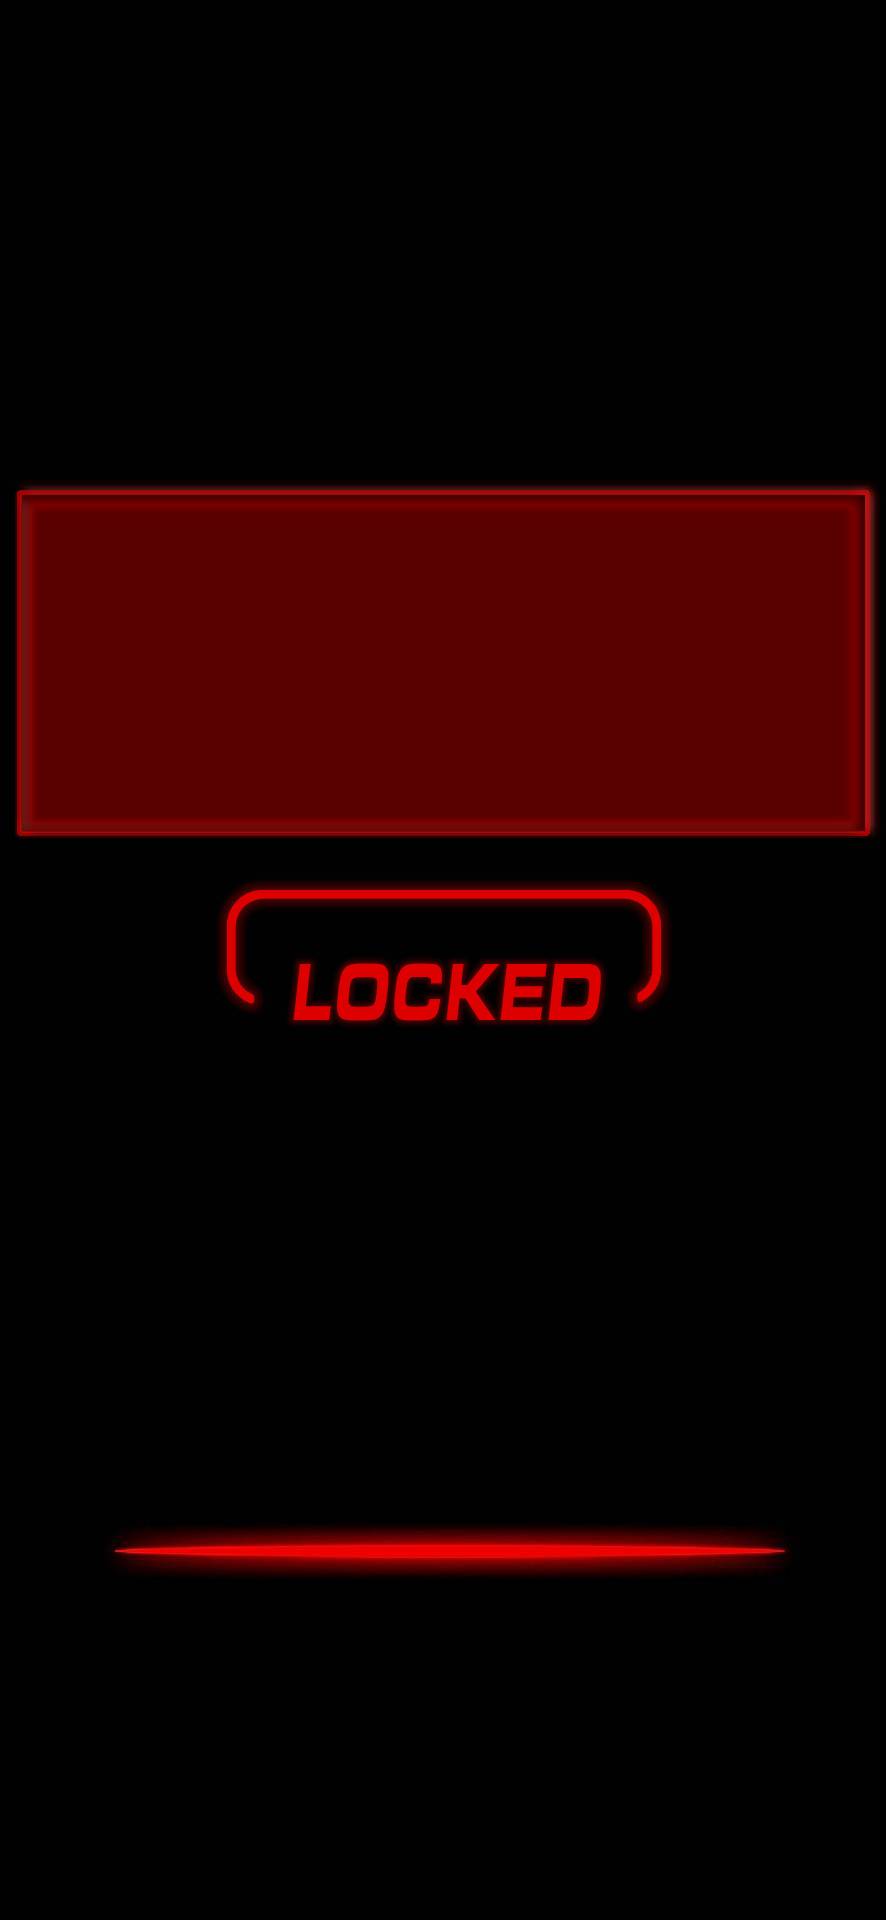 Locked - Lock Screen Background Wallpaper